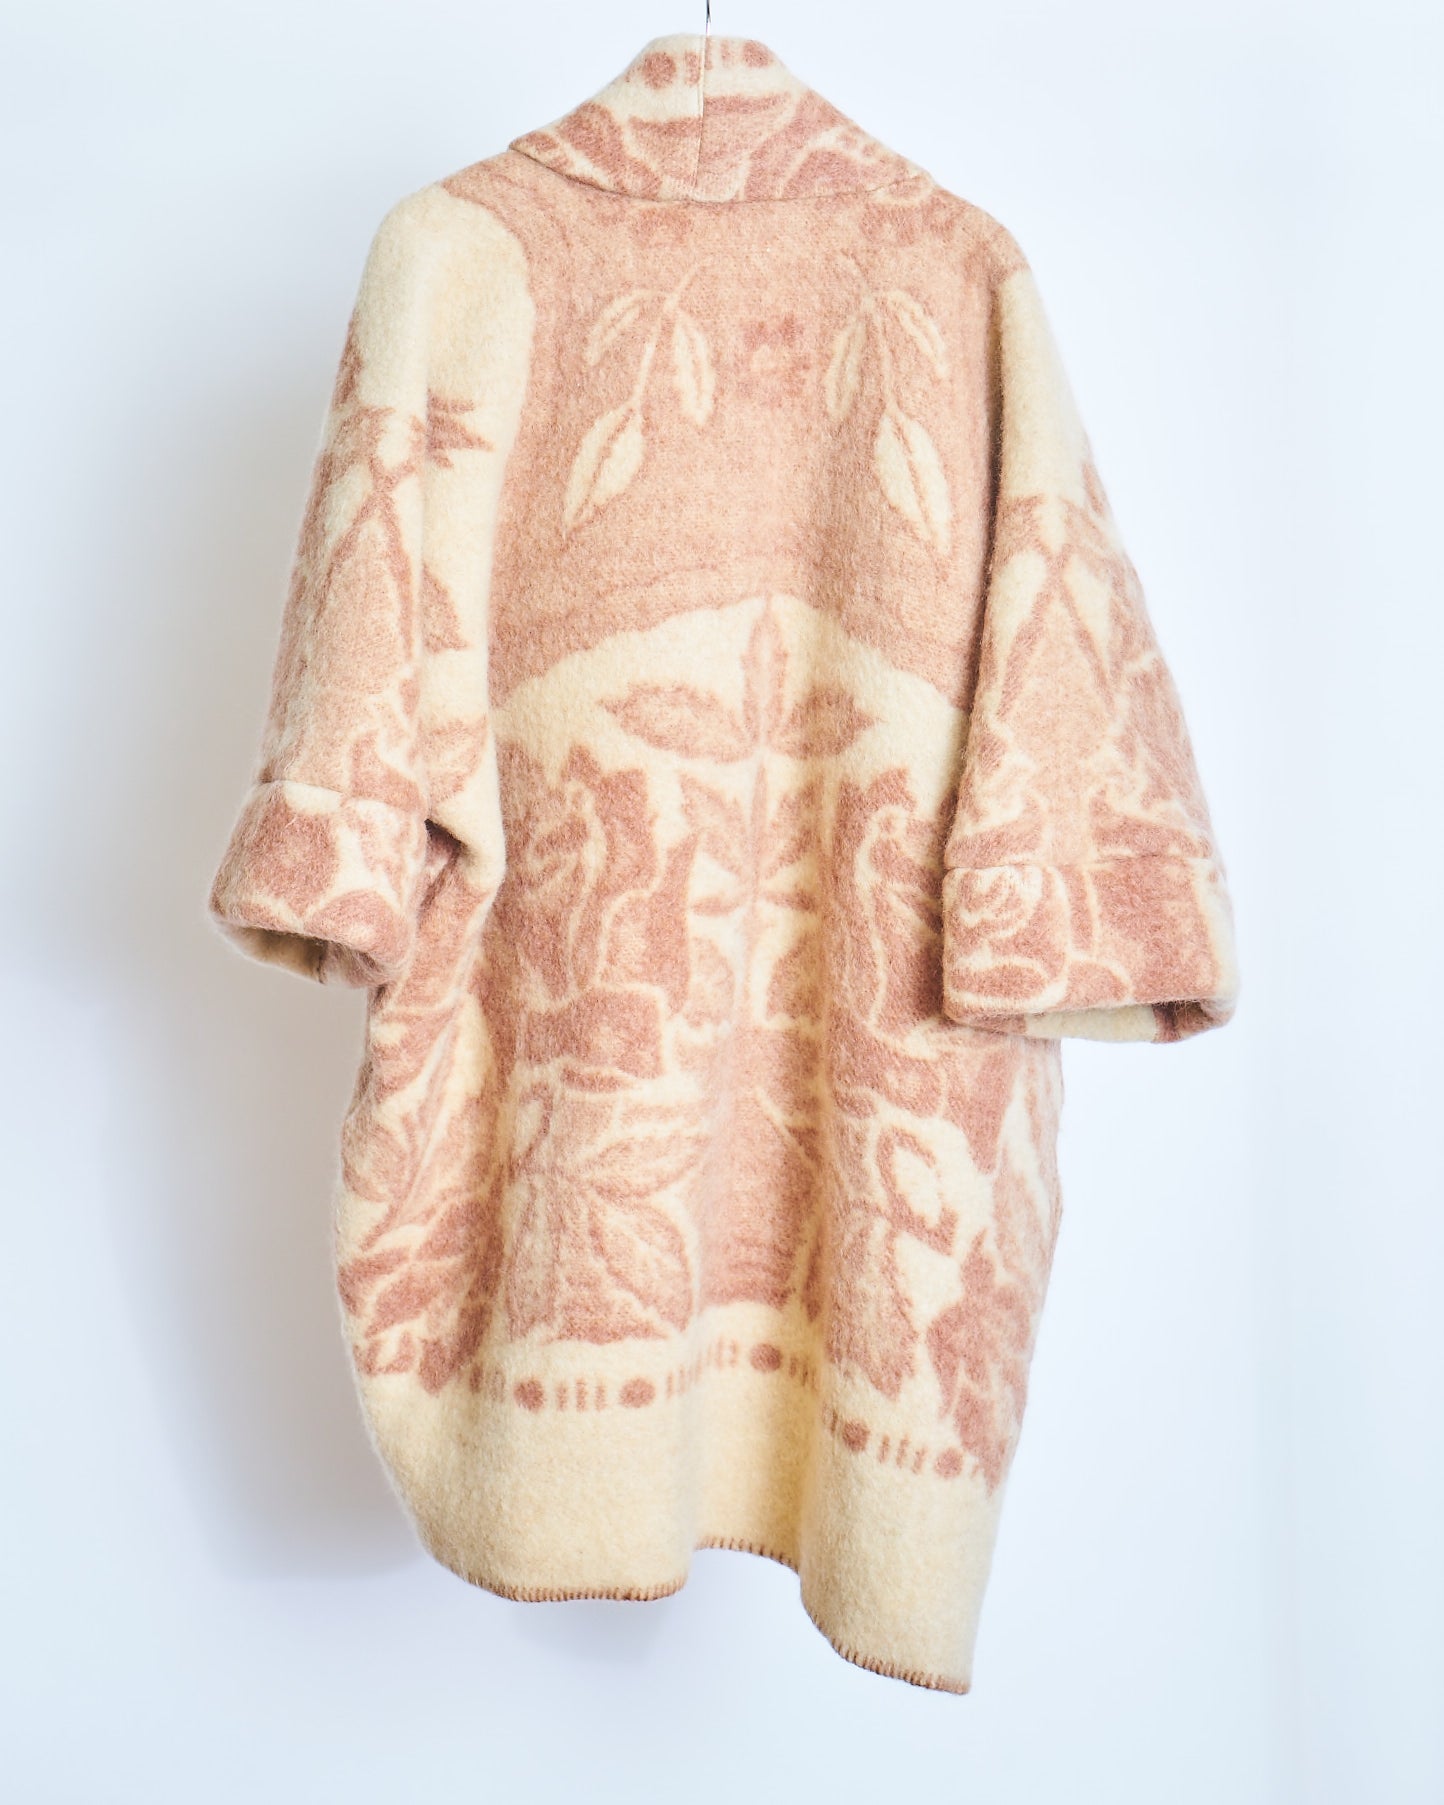 Moana Vintage Repurposed Mauve Floral Kimono Blanket Coat